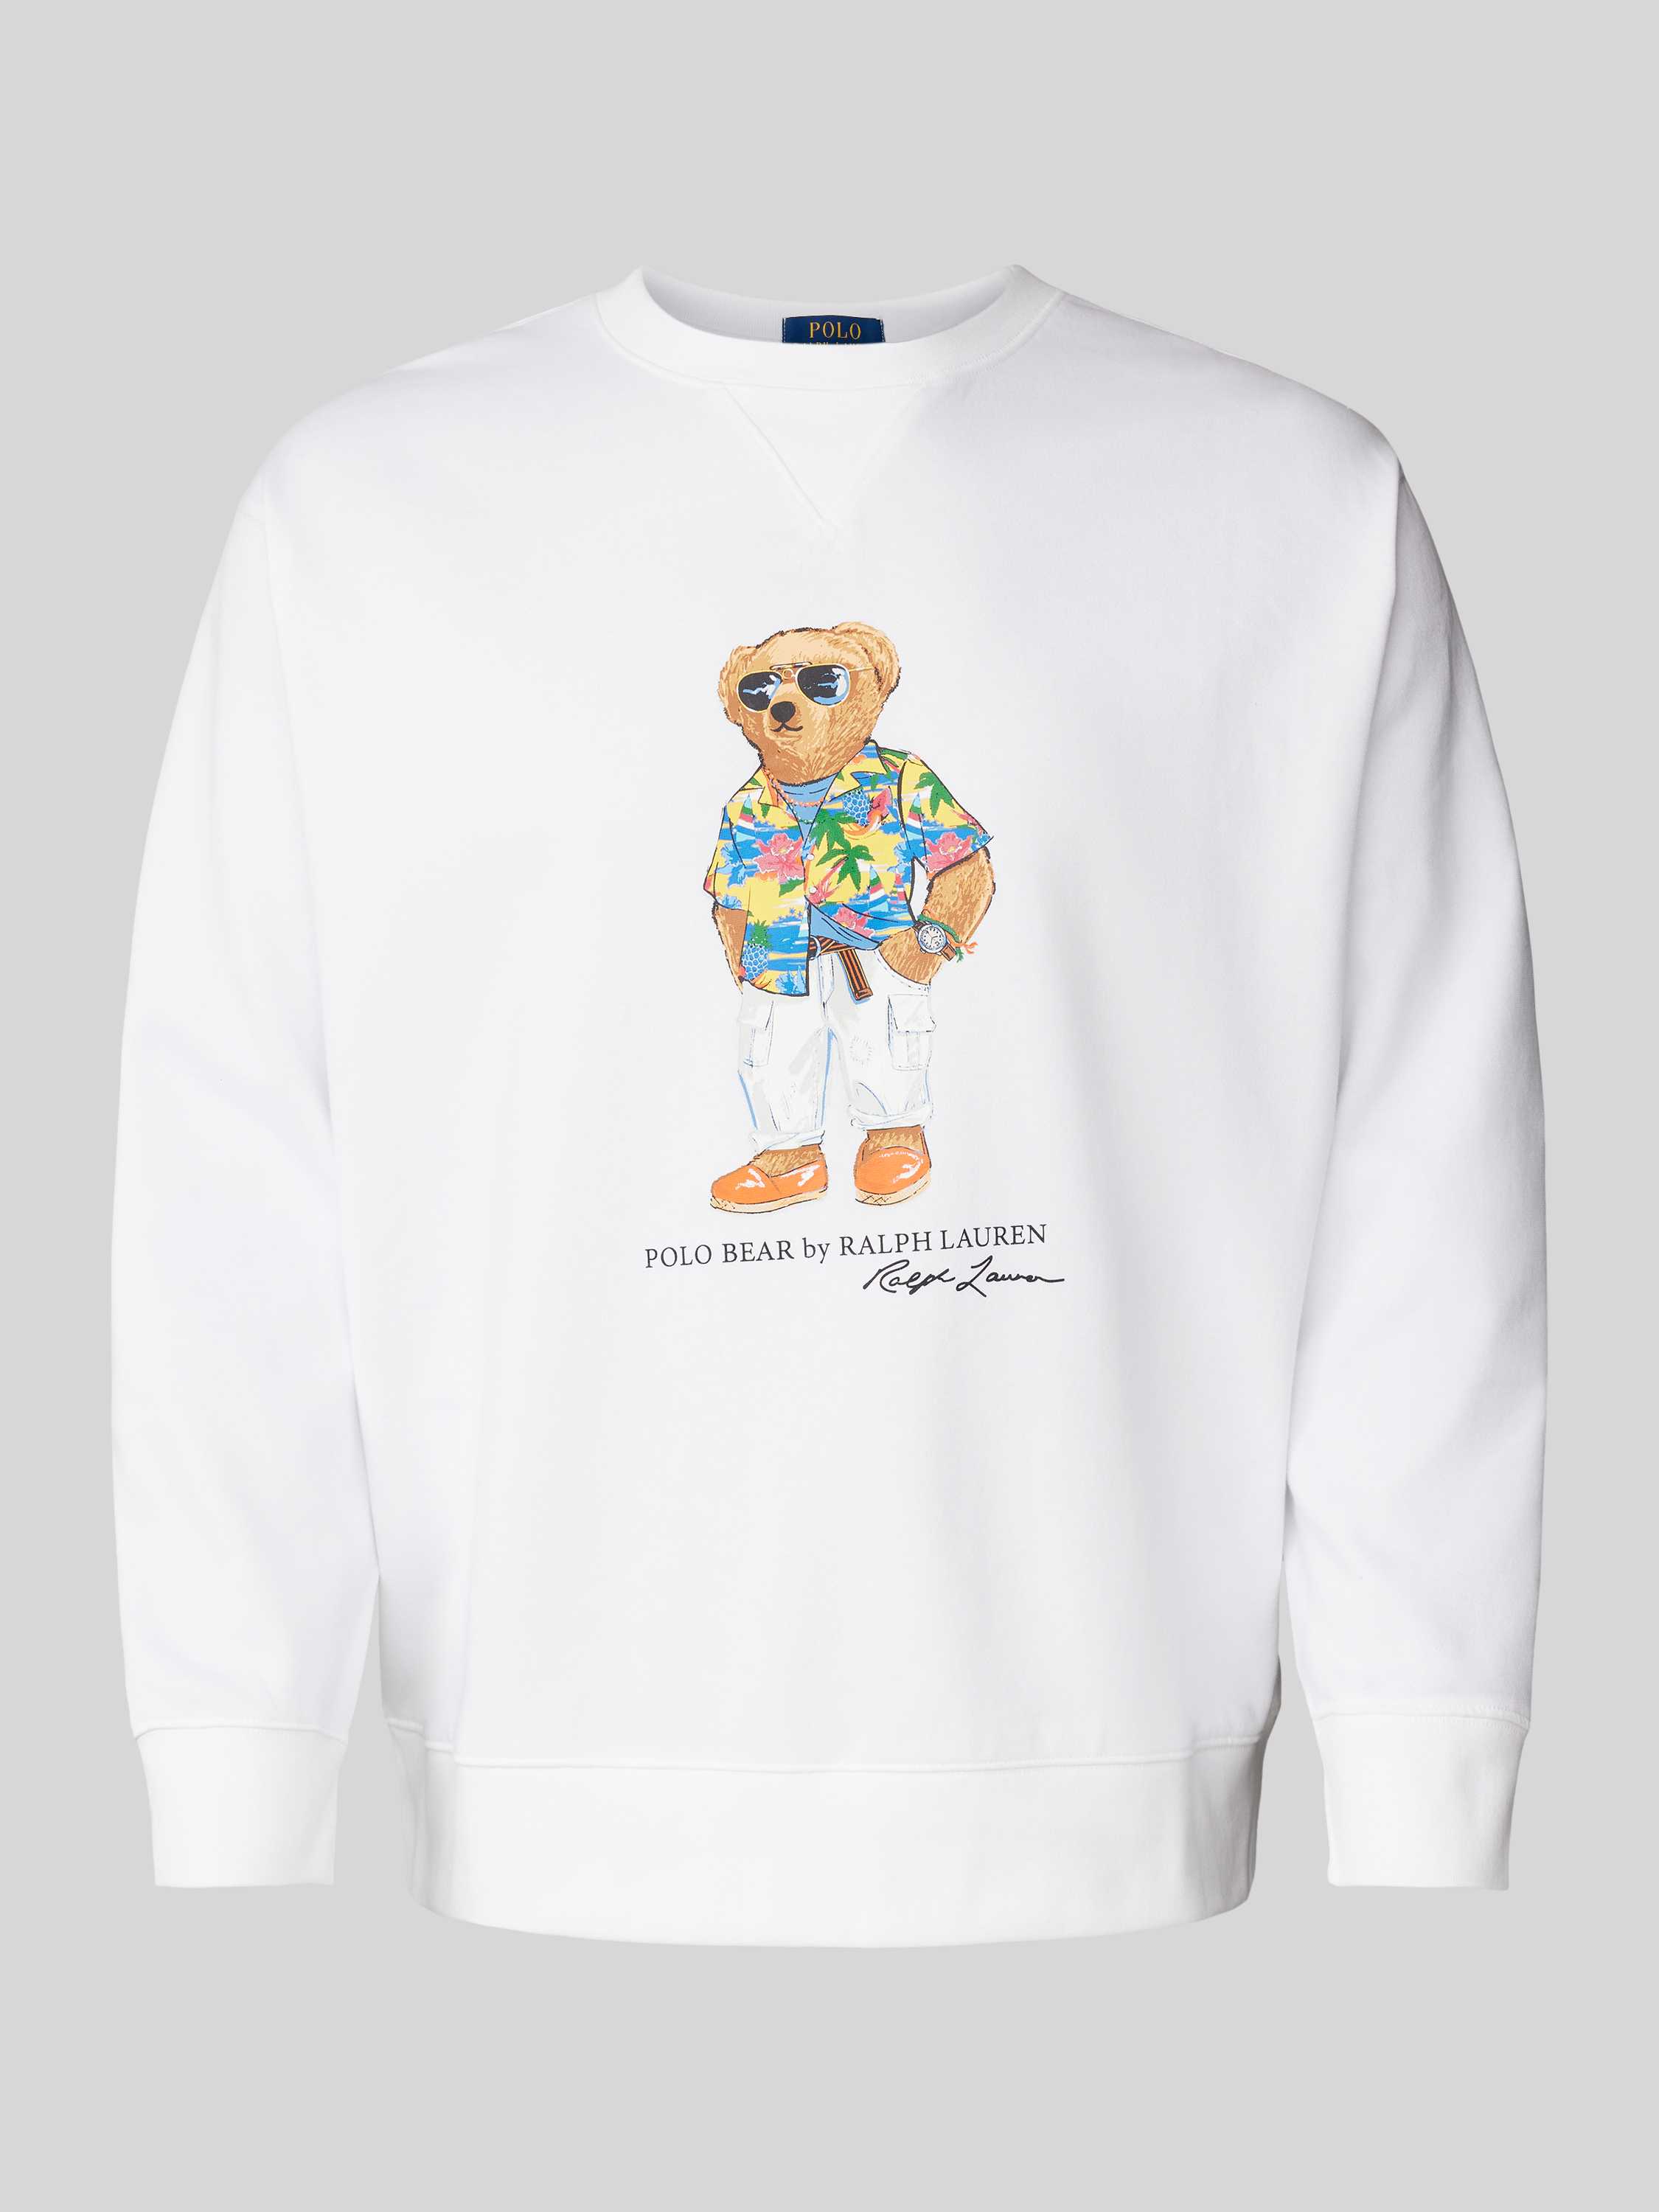 PLUS SIZE Sweatshirt mit Label-Print